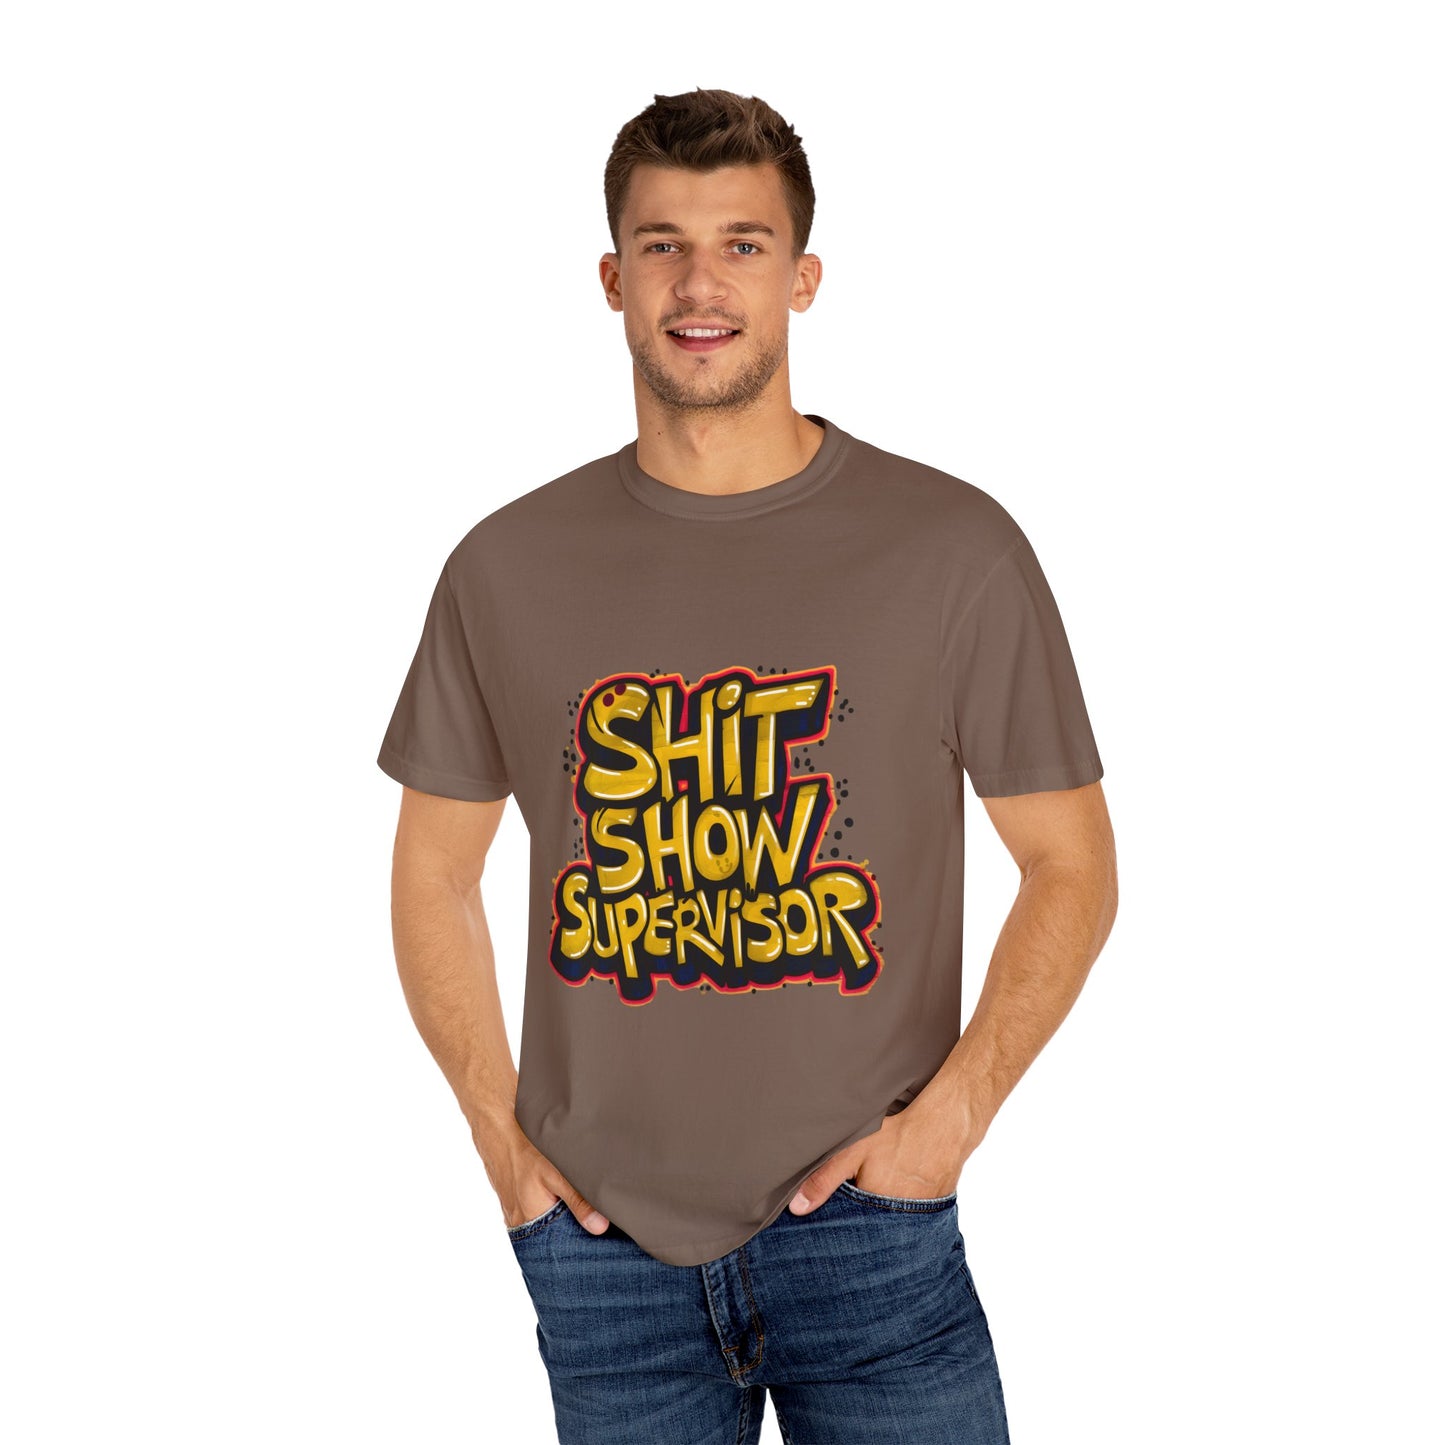 Shit Show Supervisor Urban Sarcastic Graphic Unisex Garment Dyed T-shirt Cotton Funny Humorous Graphic Soft Premium Unisex Men Women Espresso T-shirt Birthday Gift-60